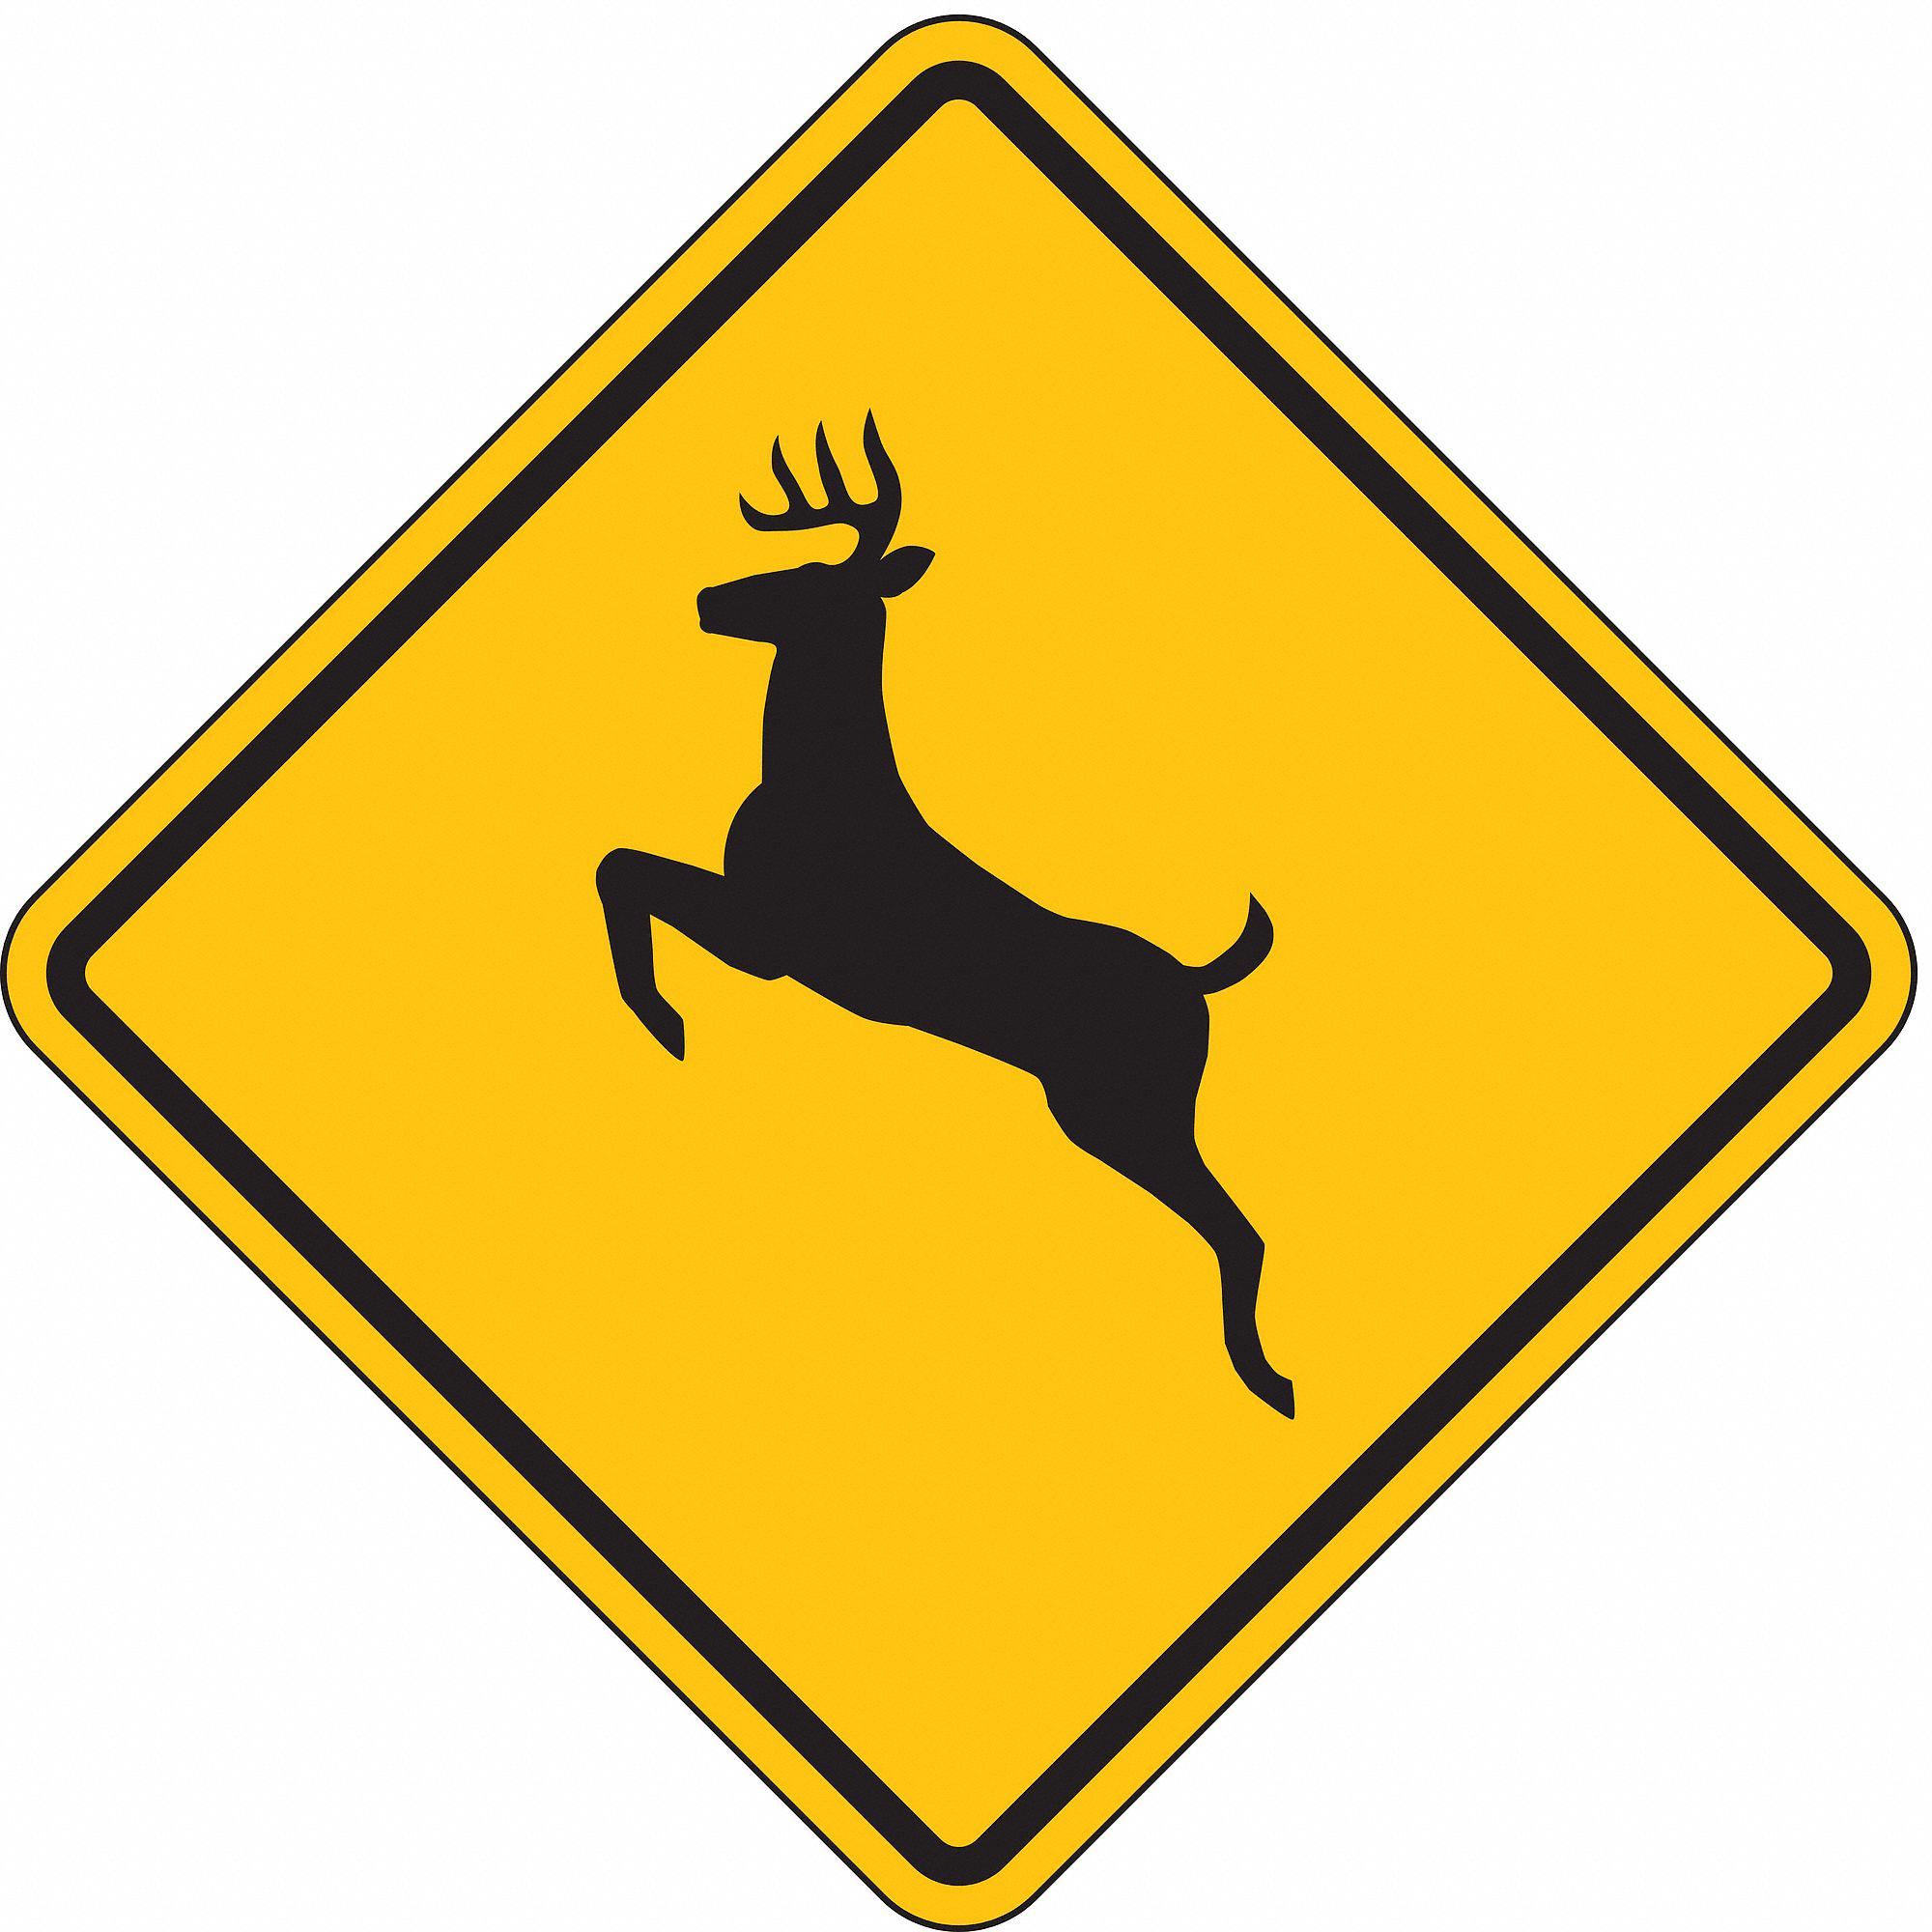 LYLE Deer Crossing Pictogram Traffic Sign, MUTCD Code W113, 24 in x 24